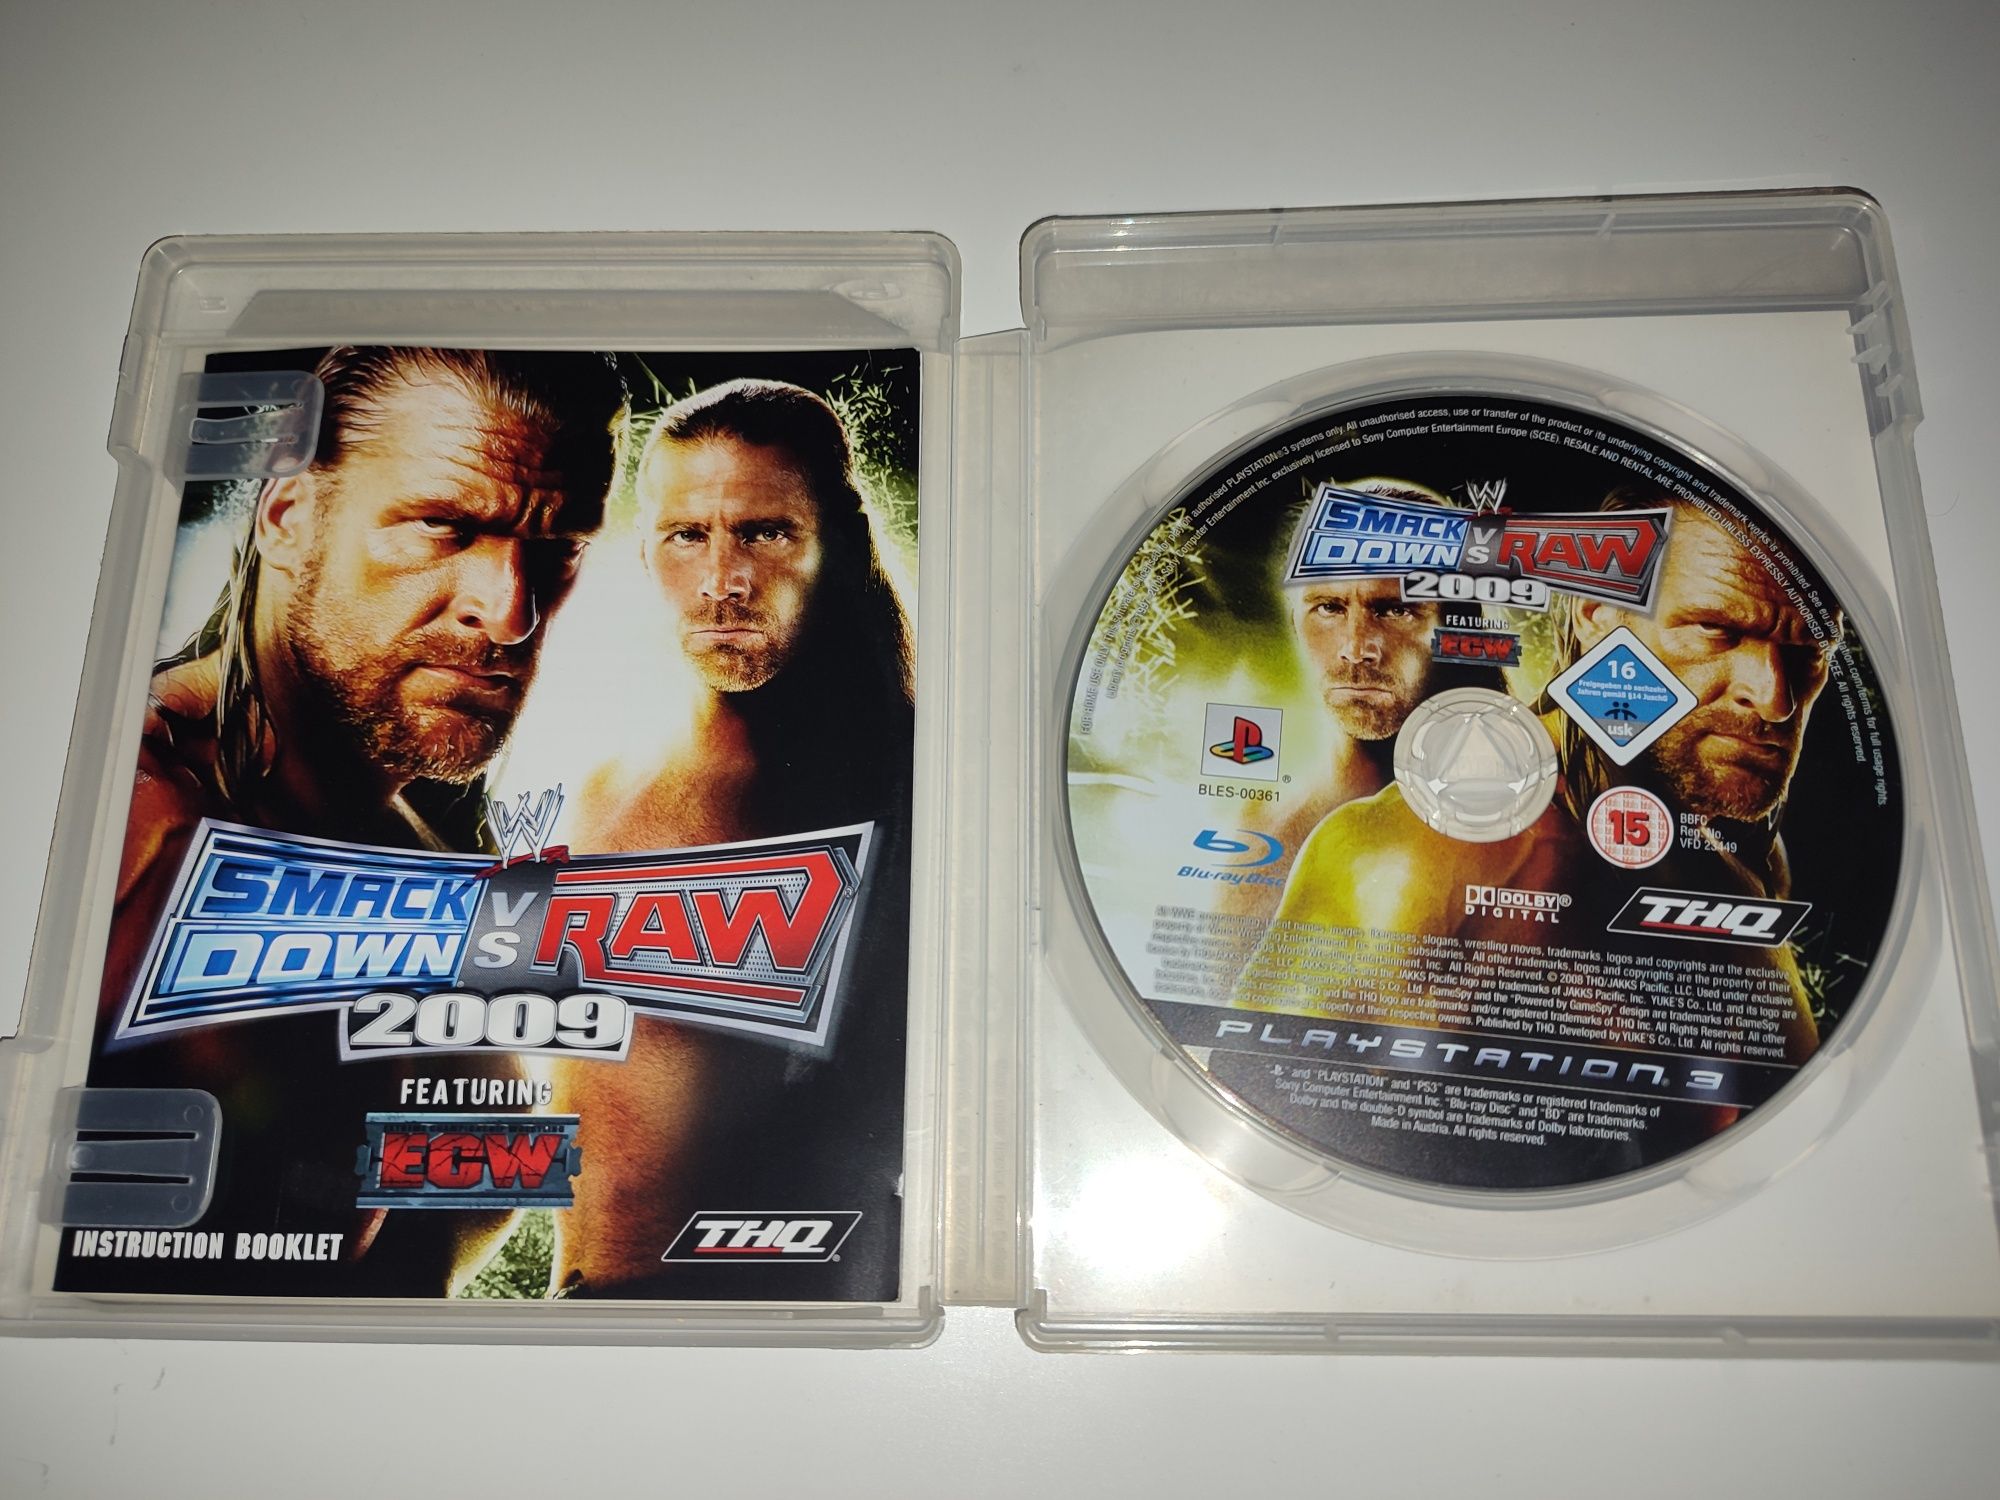 Gra Ps3 Smack Down vs Raw 2009 wrestling MMA Boks gry PlayStation 3